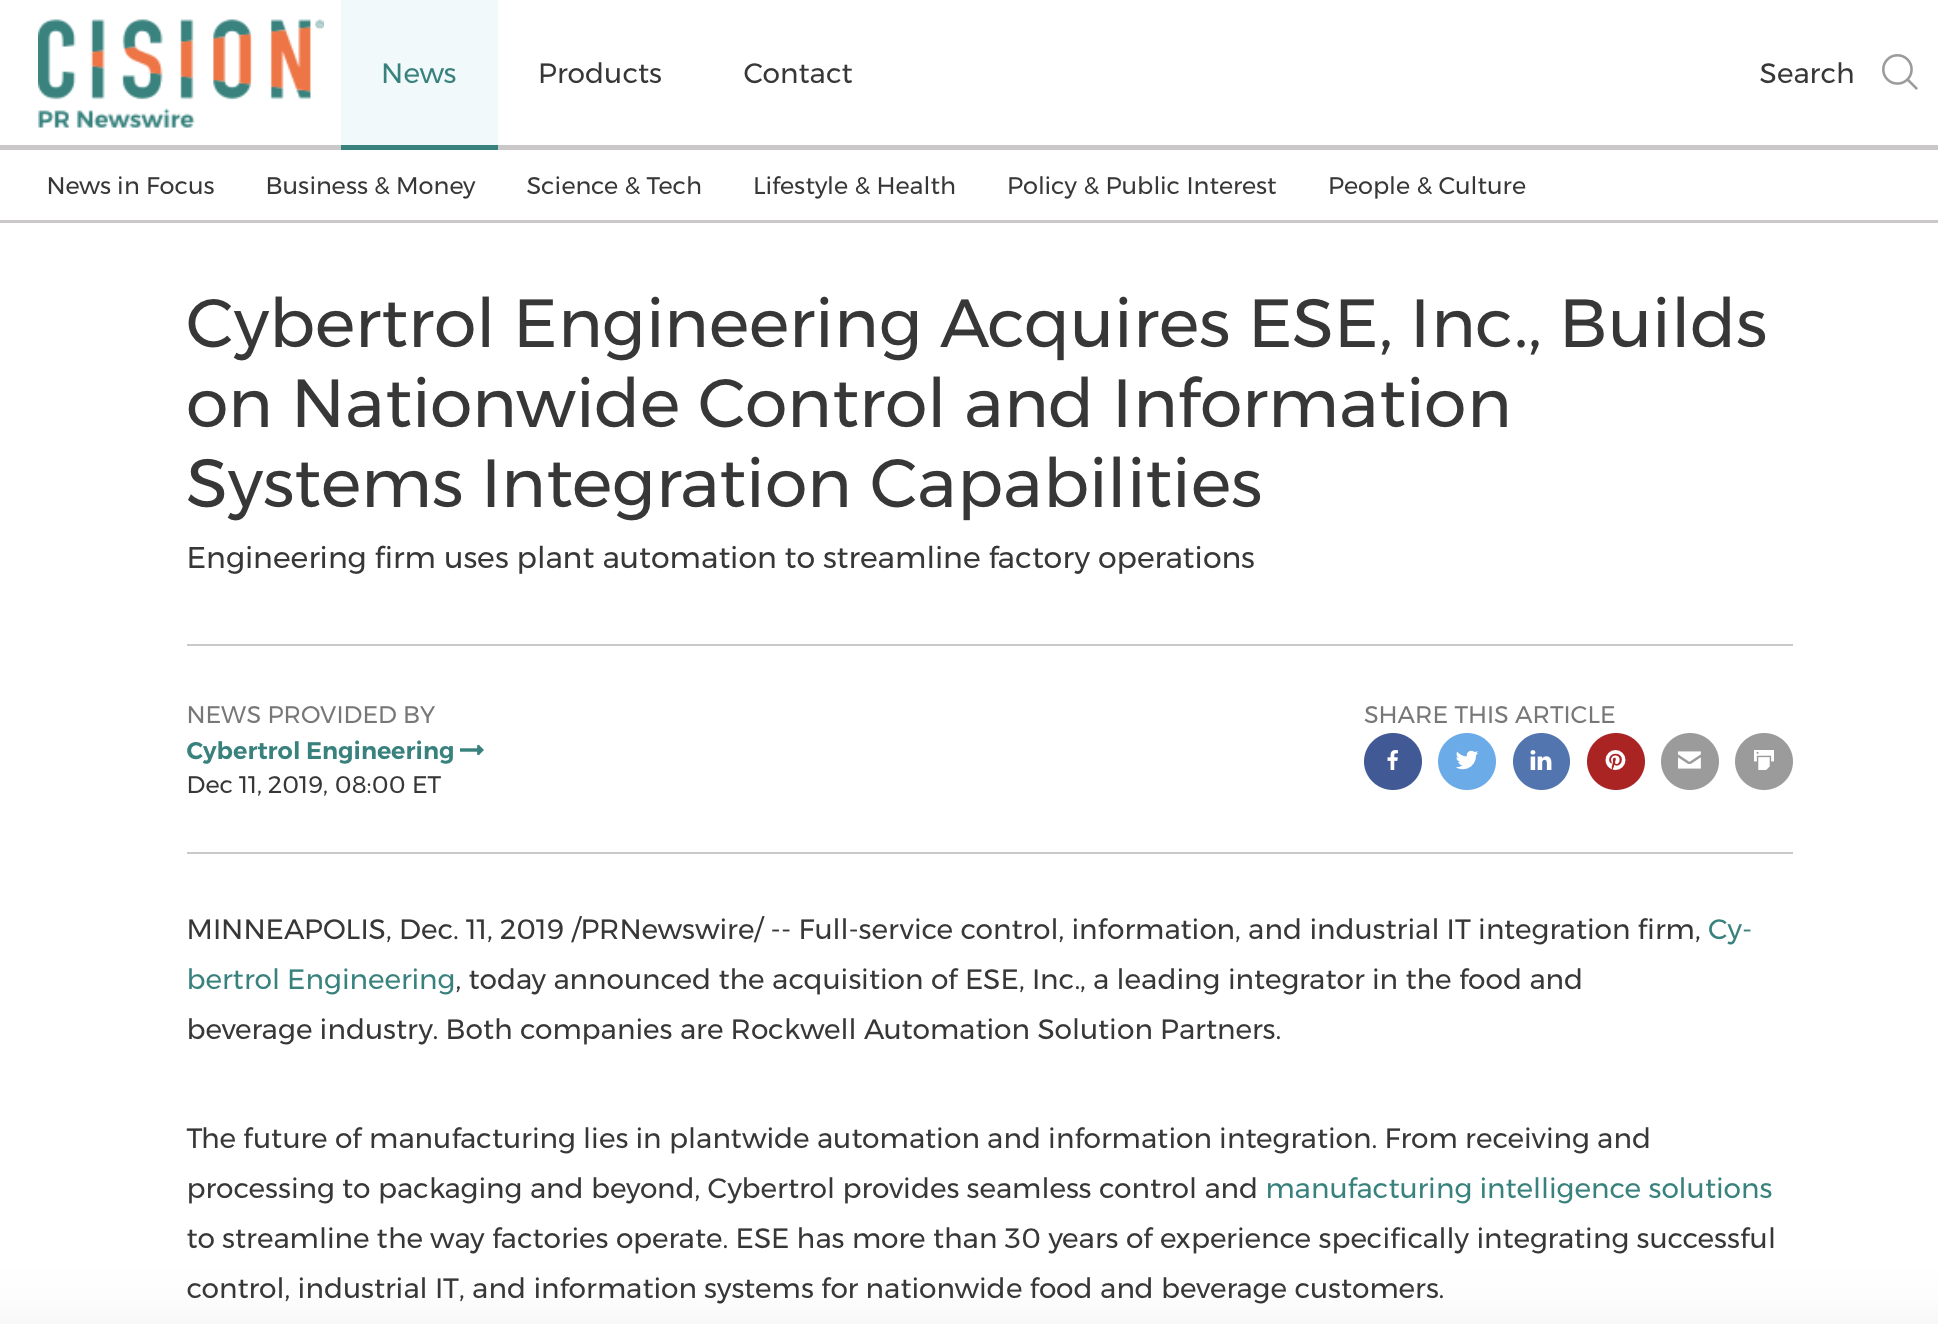 Cybertrol Engineering Press Release Example